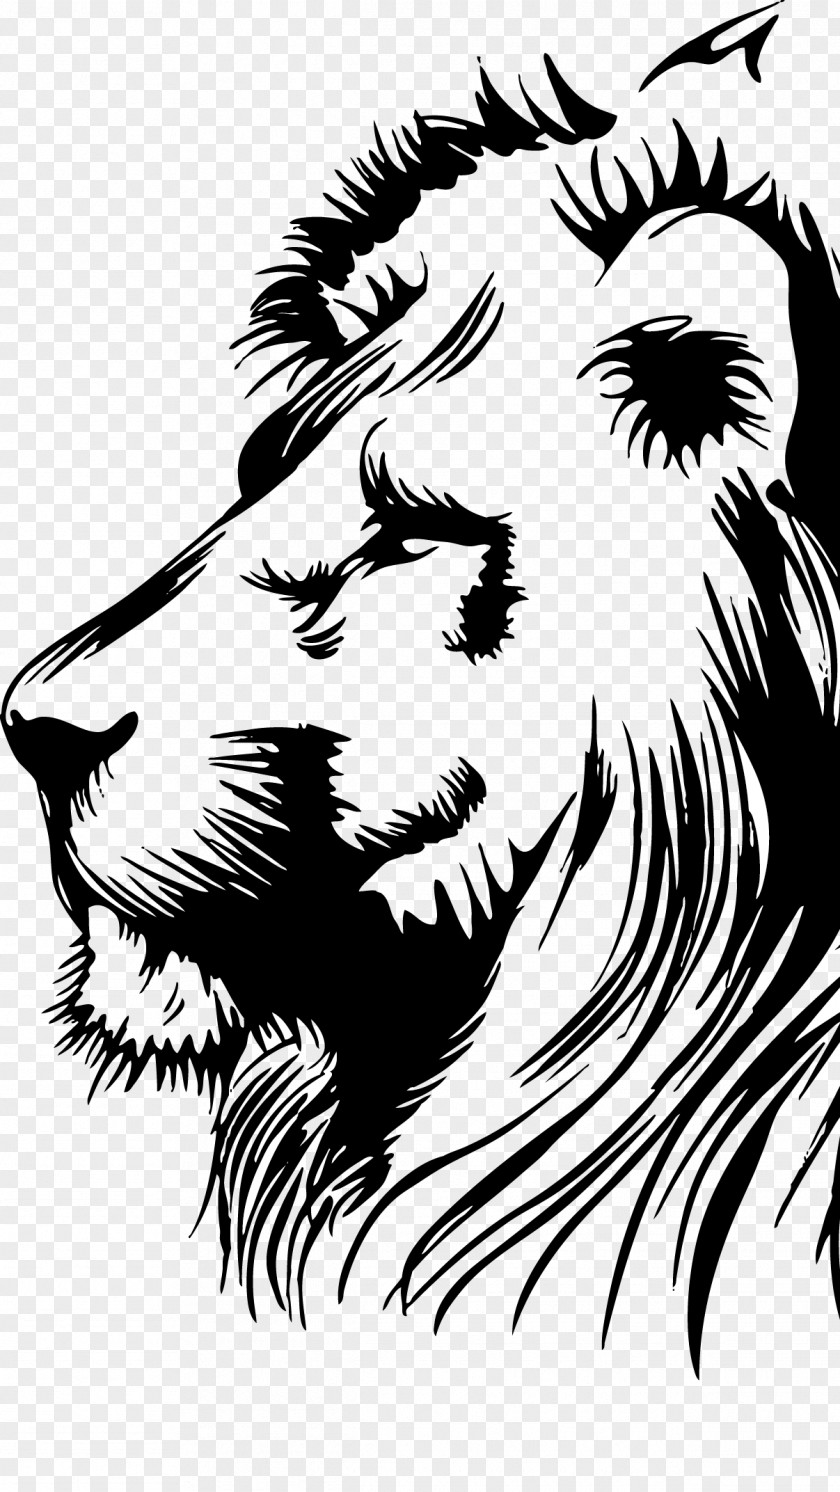 Lion Silhouette Head Clip Art Image Illustration PNG